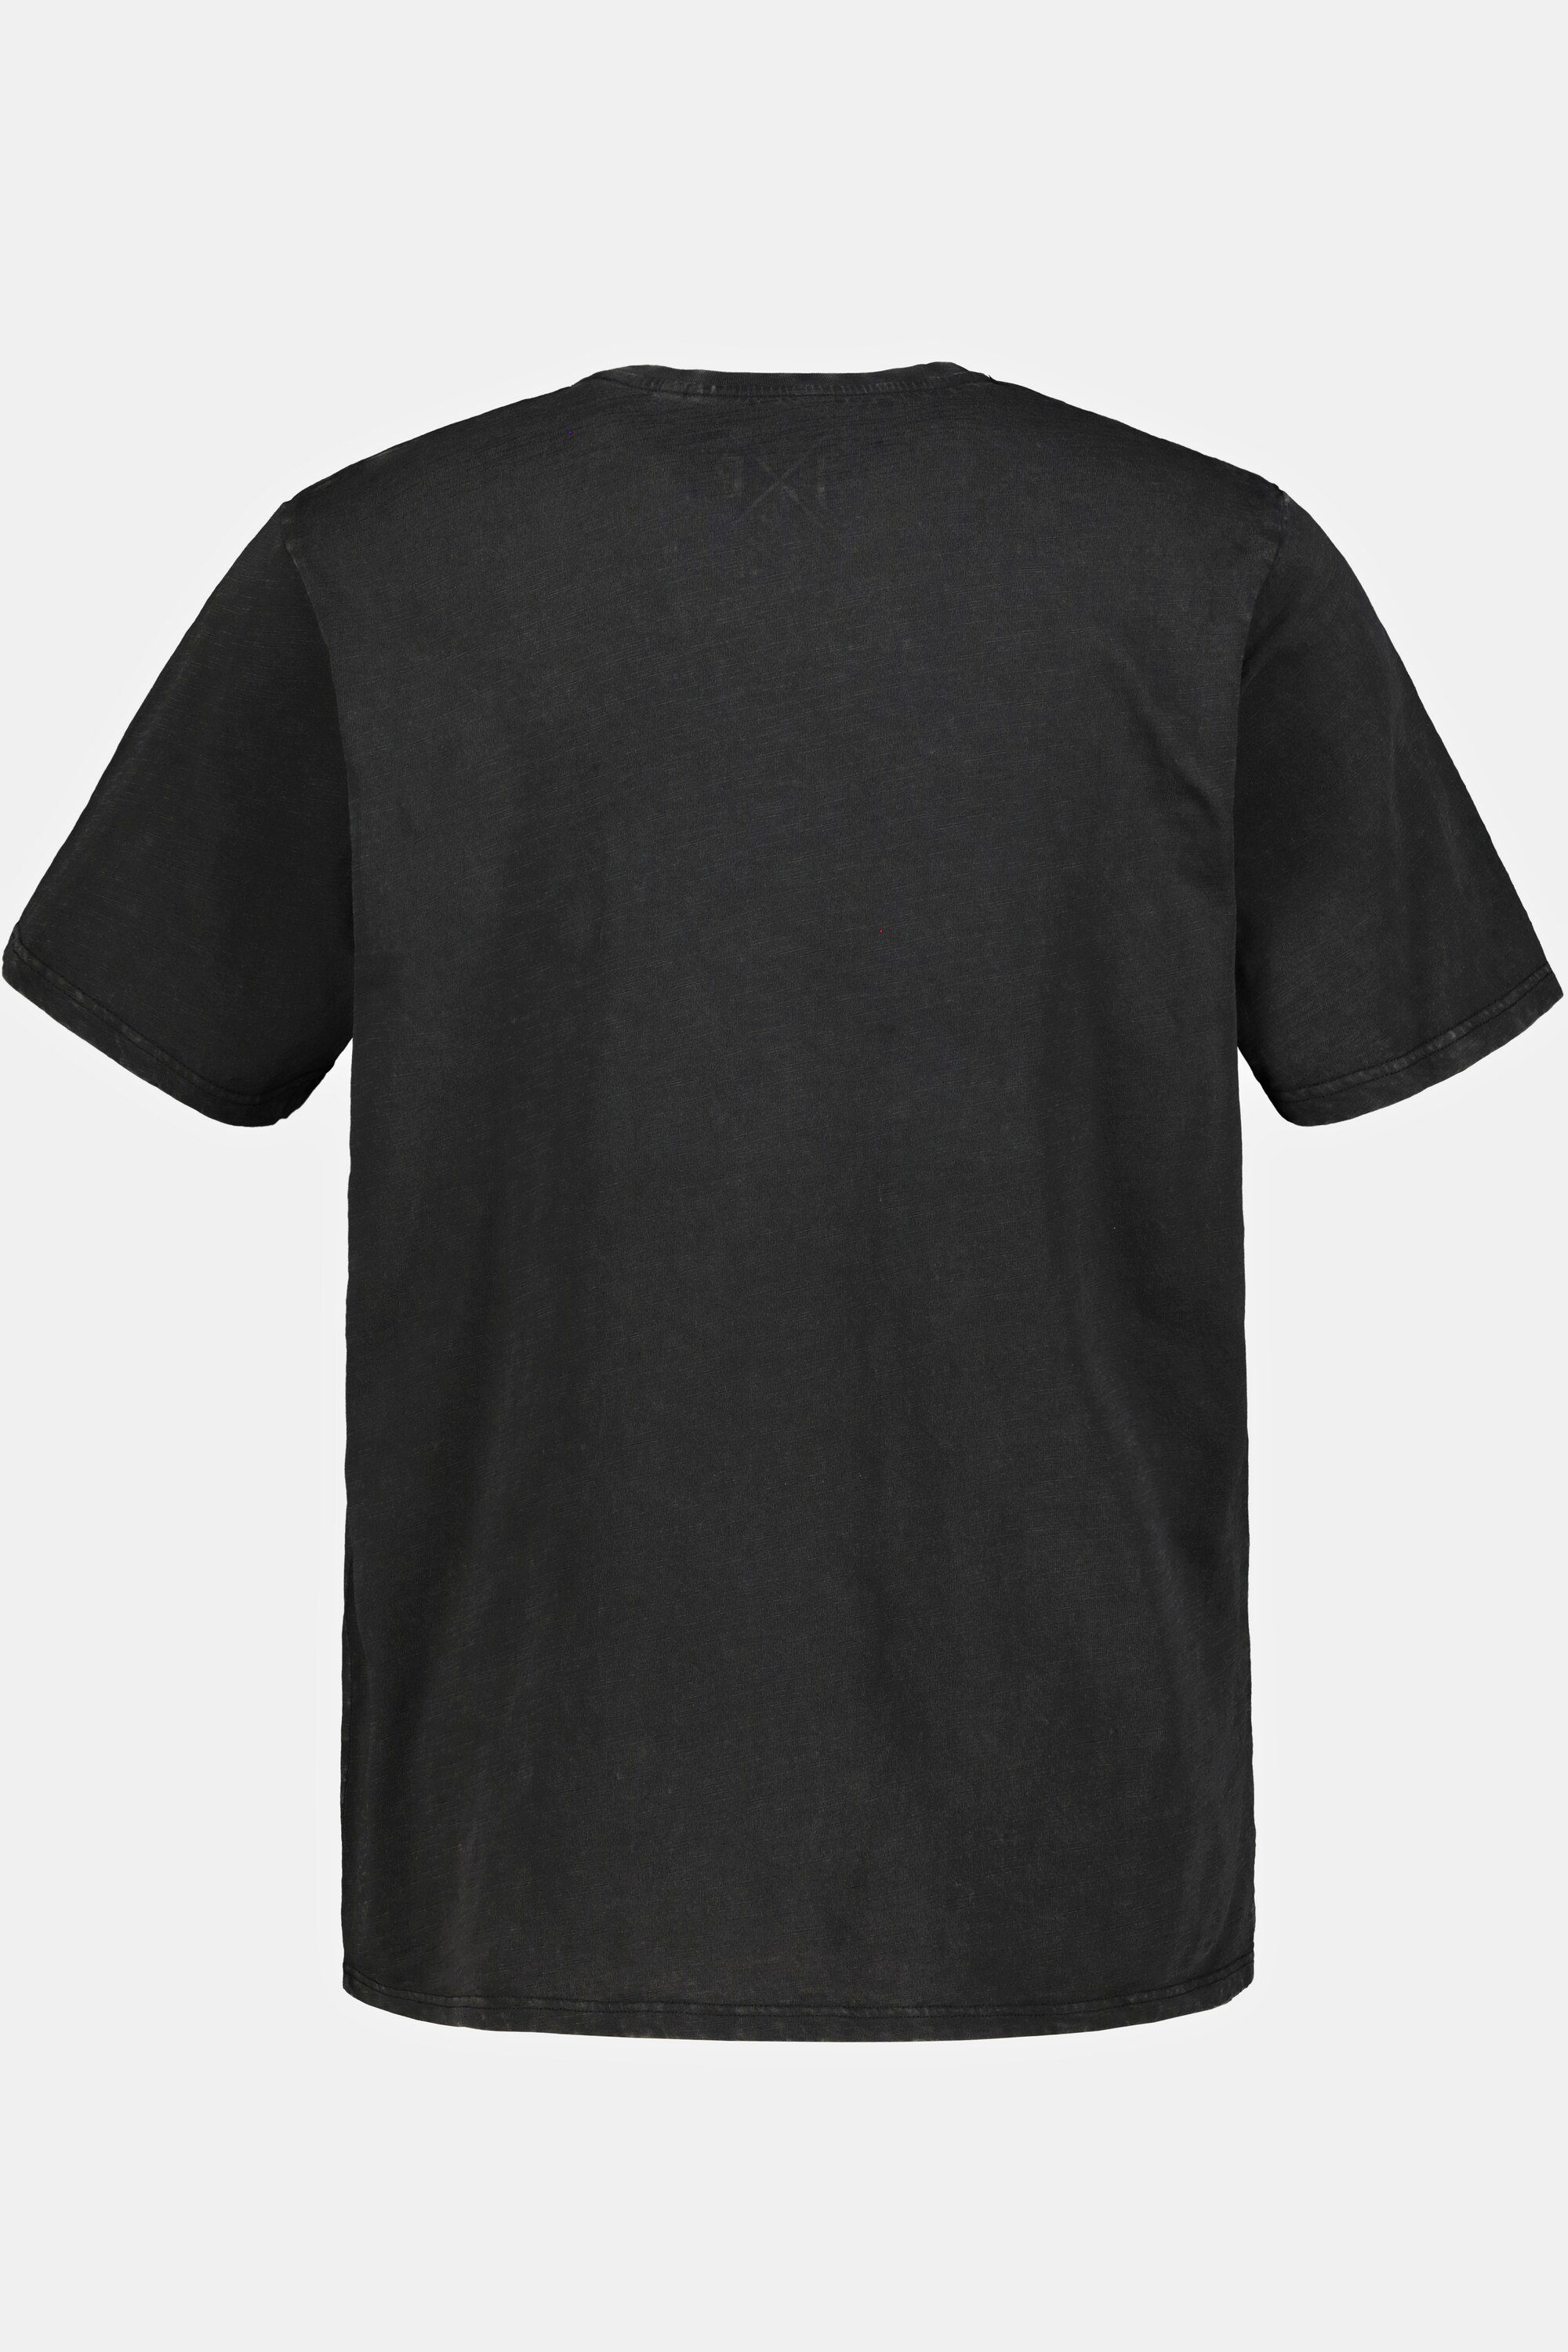 Flammjersey Halbarm T-Shirt Look T-Shirt schwarz Vintage JP1880